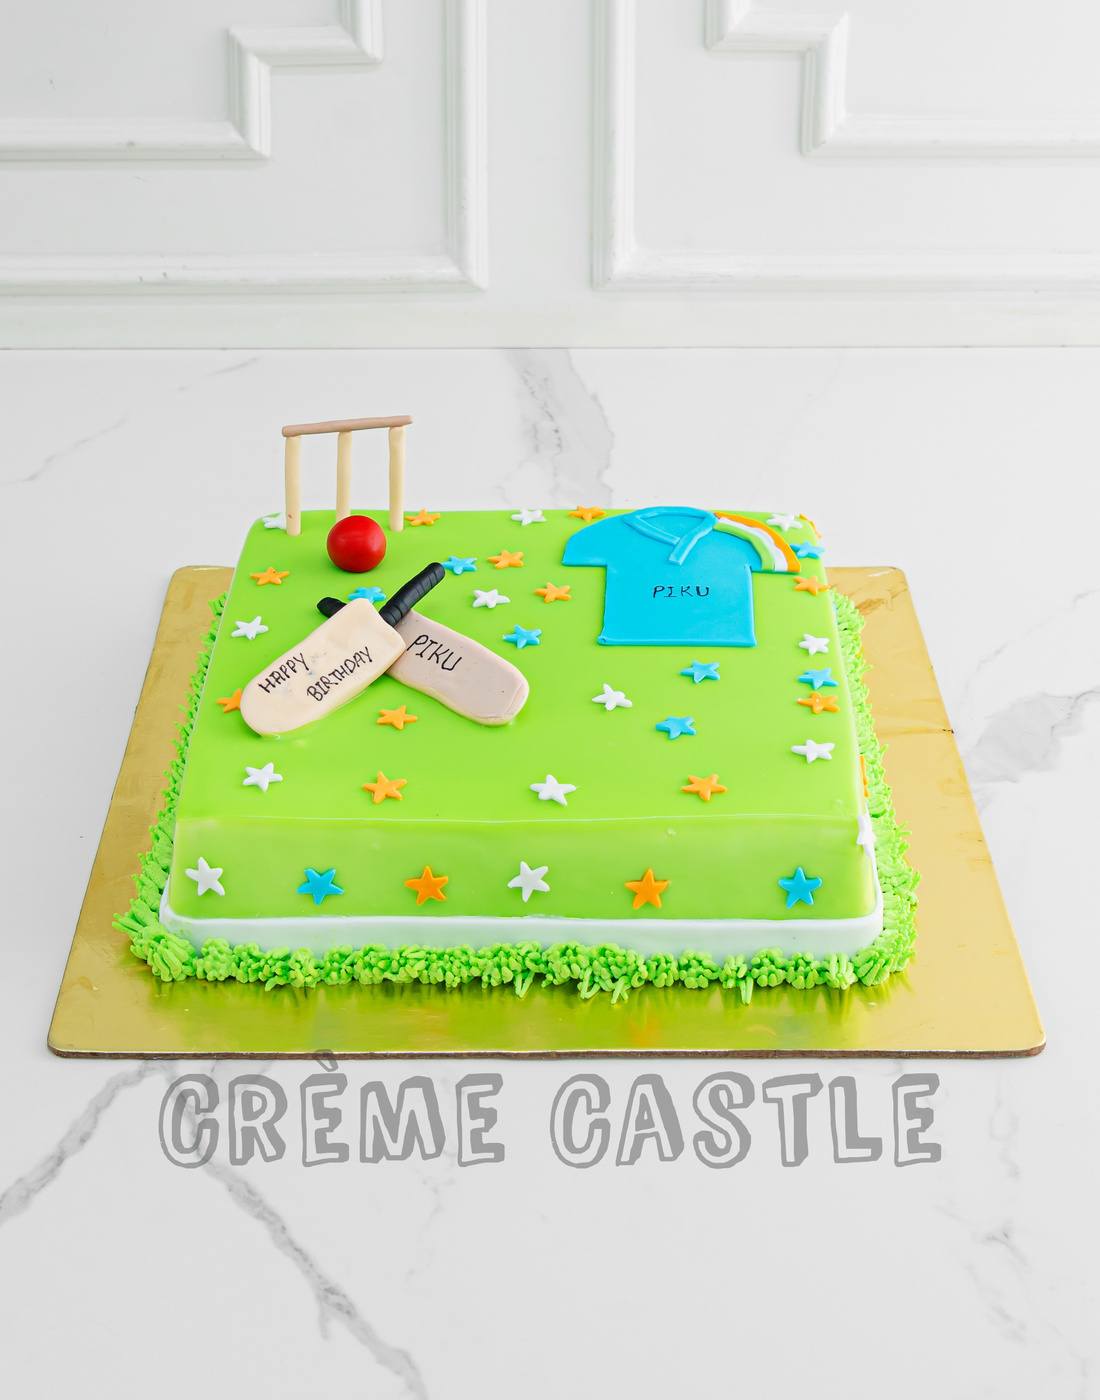 Cricket Fan - Creme Castle